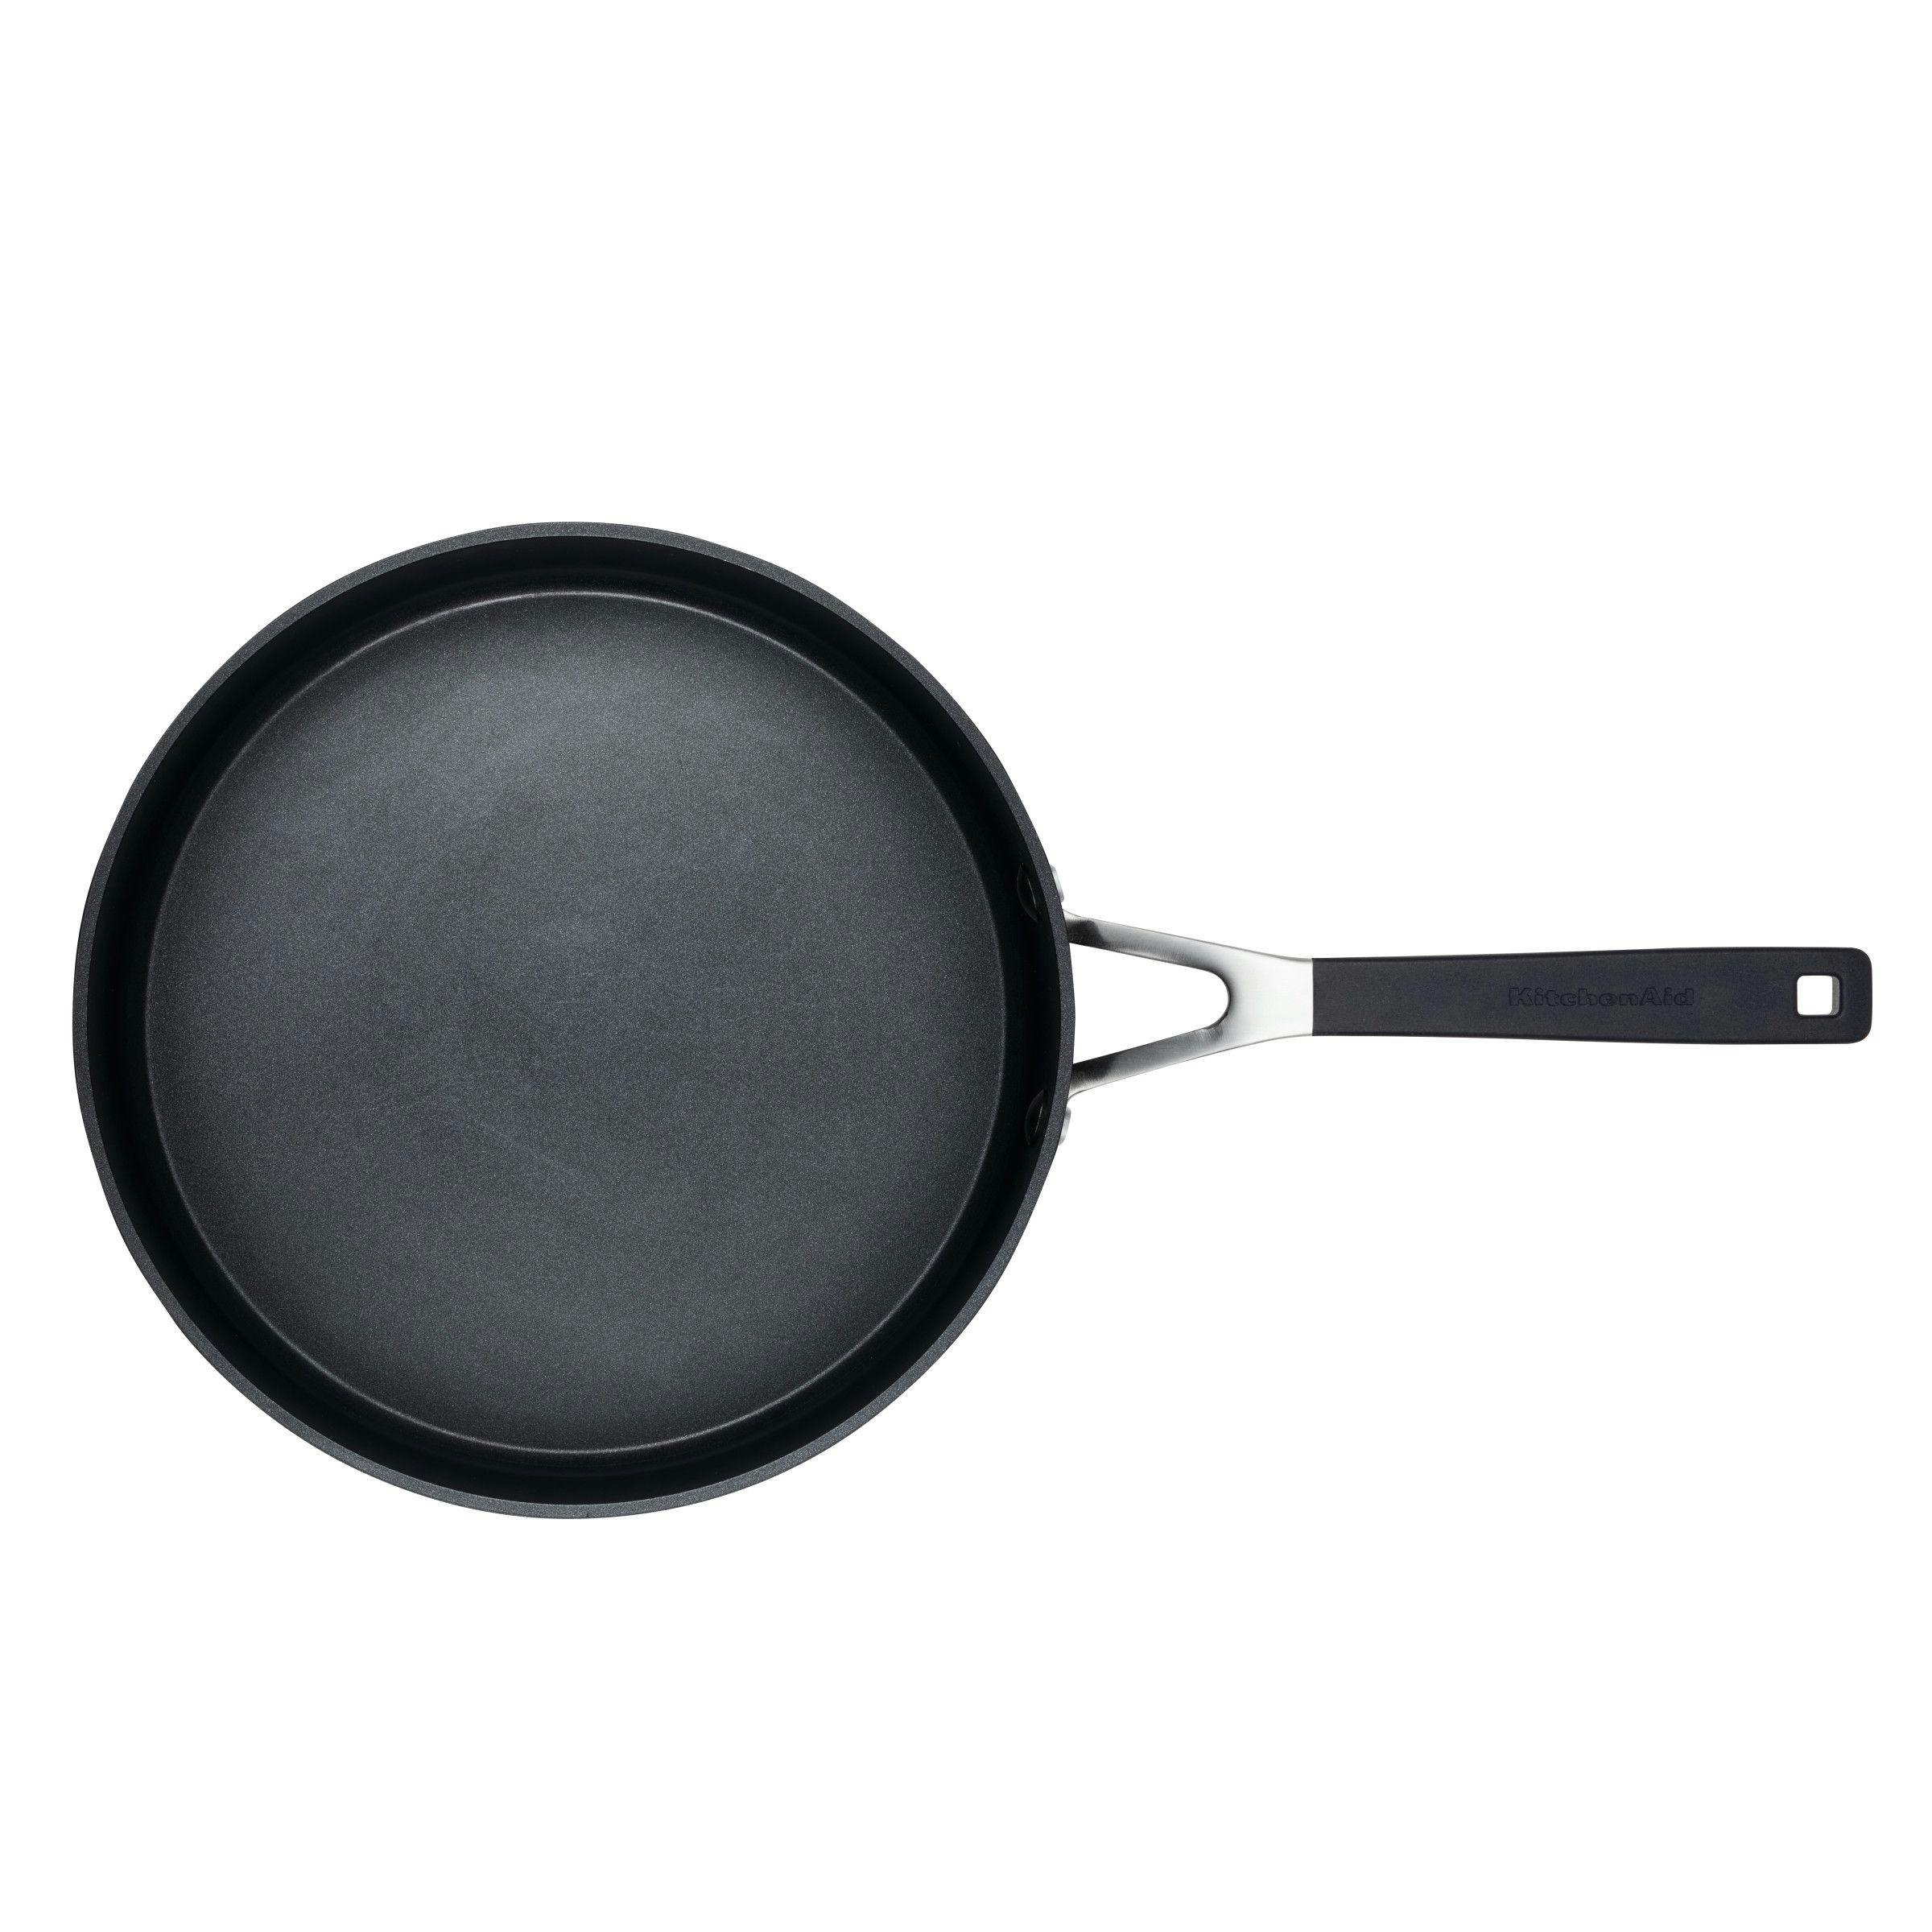 KitchenAid, Hard Anodized Nonstick Saute Pan with Lid - Zola